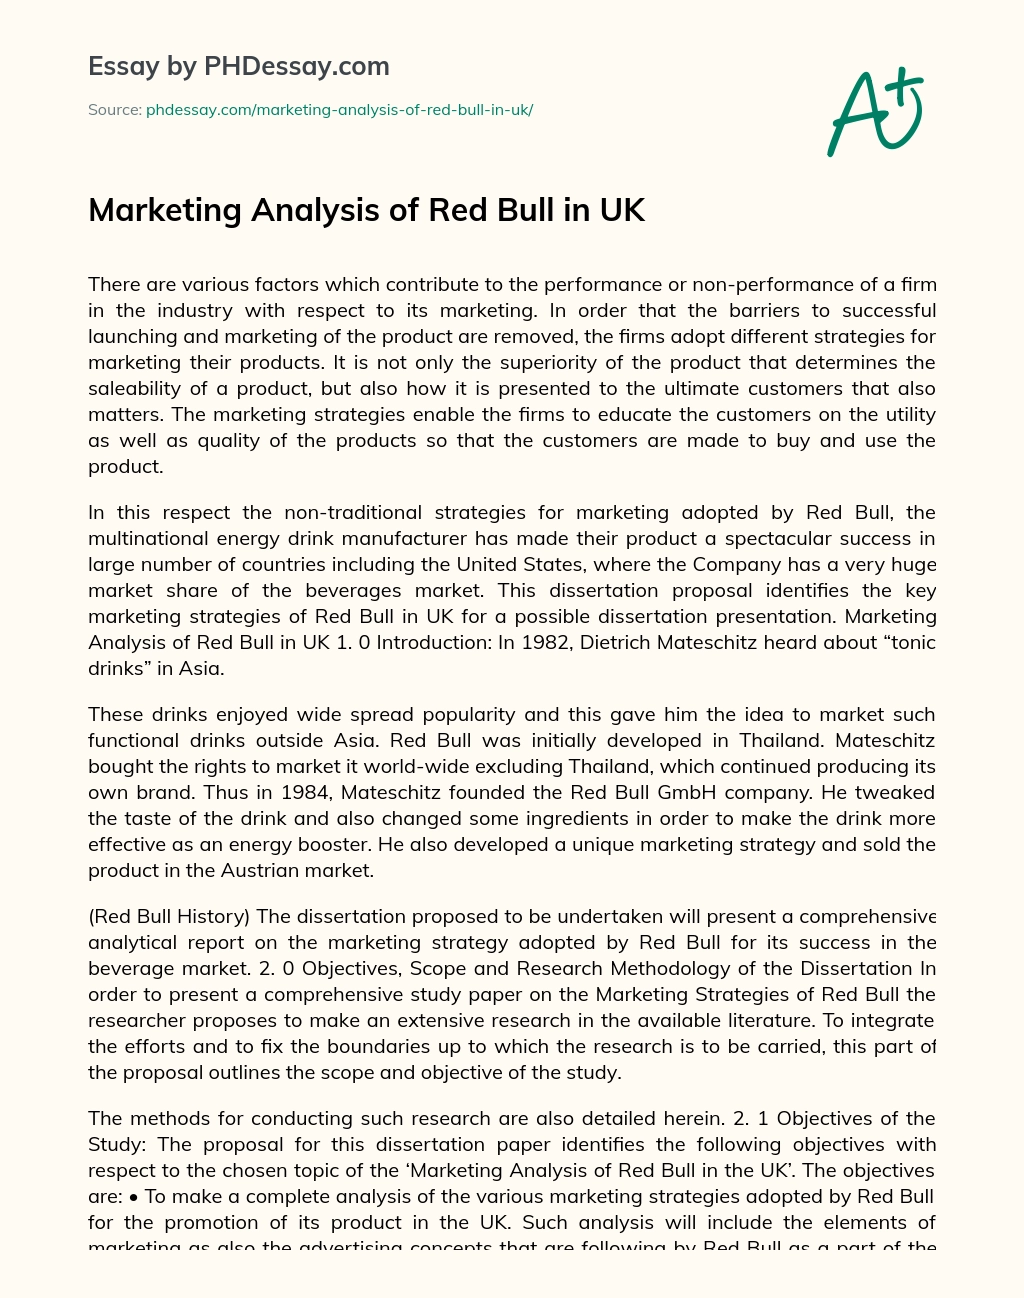 Marketing Analysis of Red Bull in UK essay